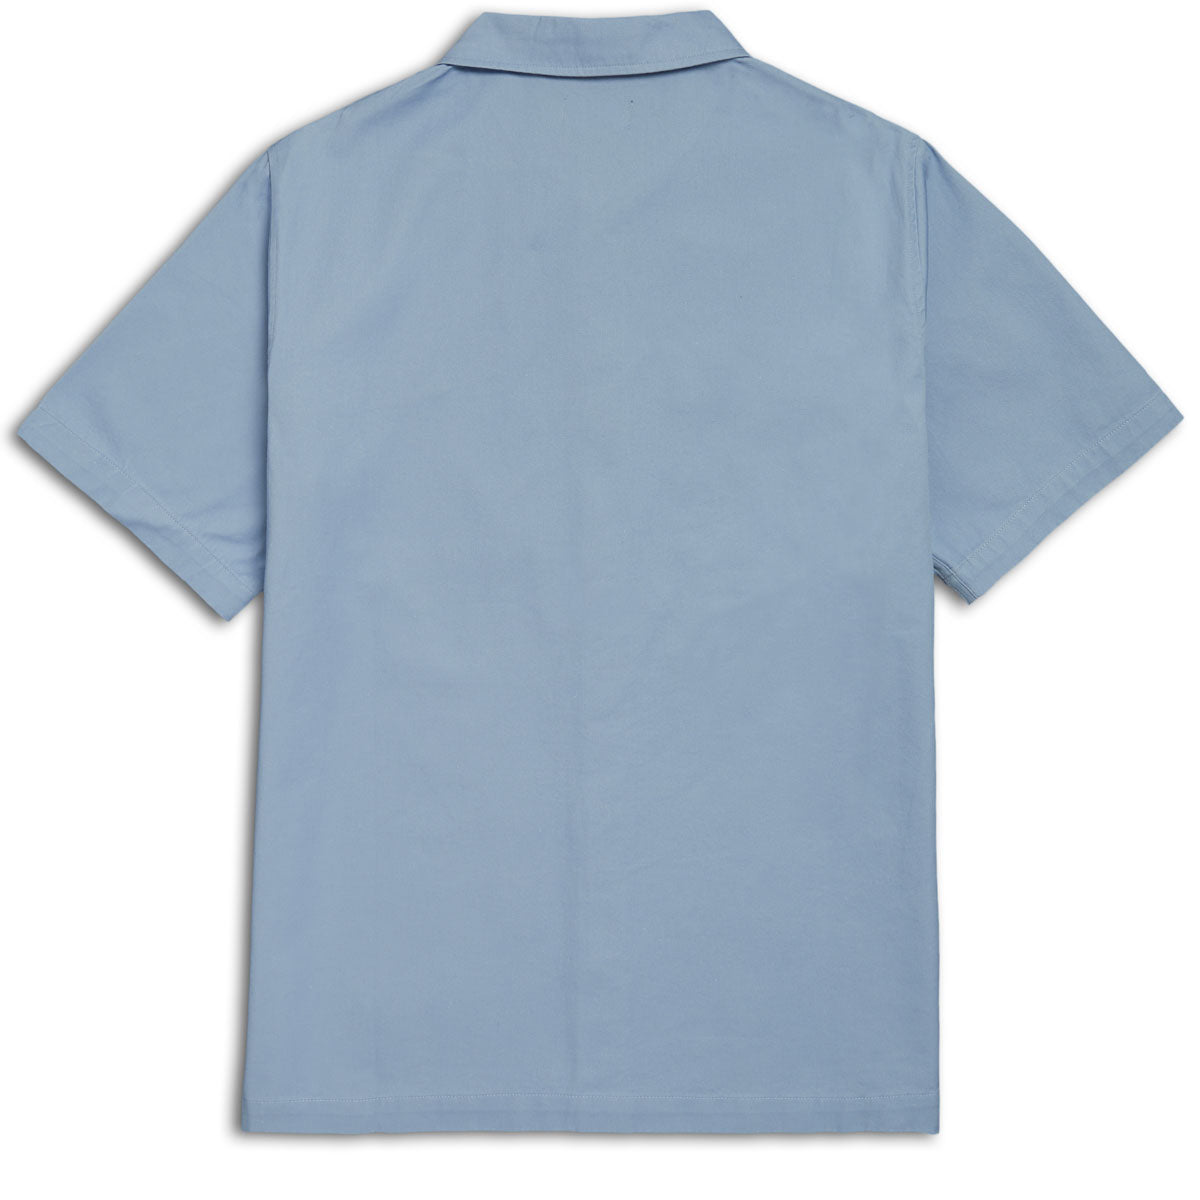 CCS Custom Embroidered Work Shirt - Light Blue image 3